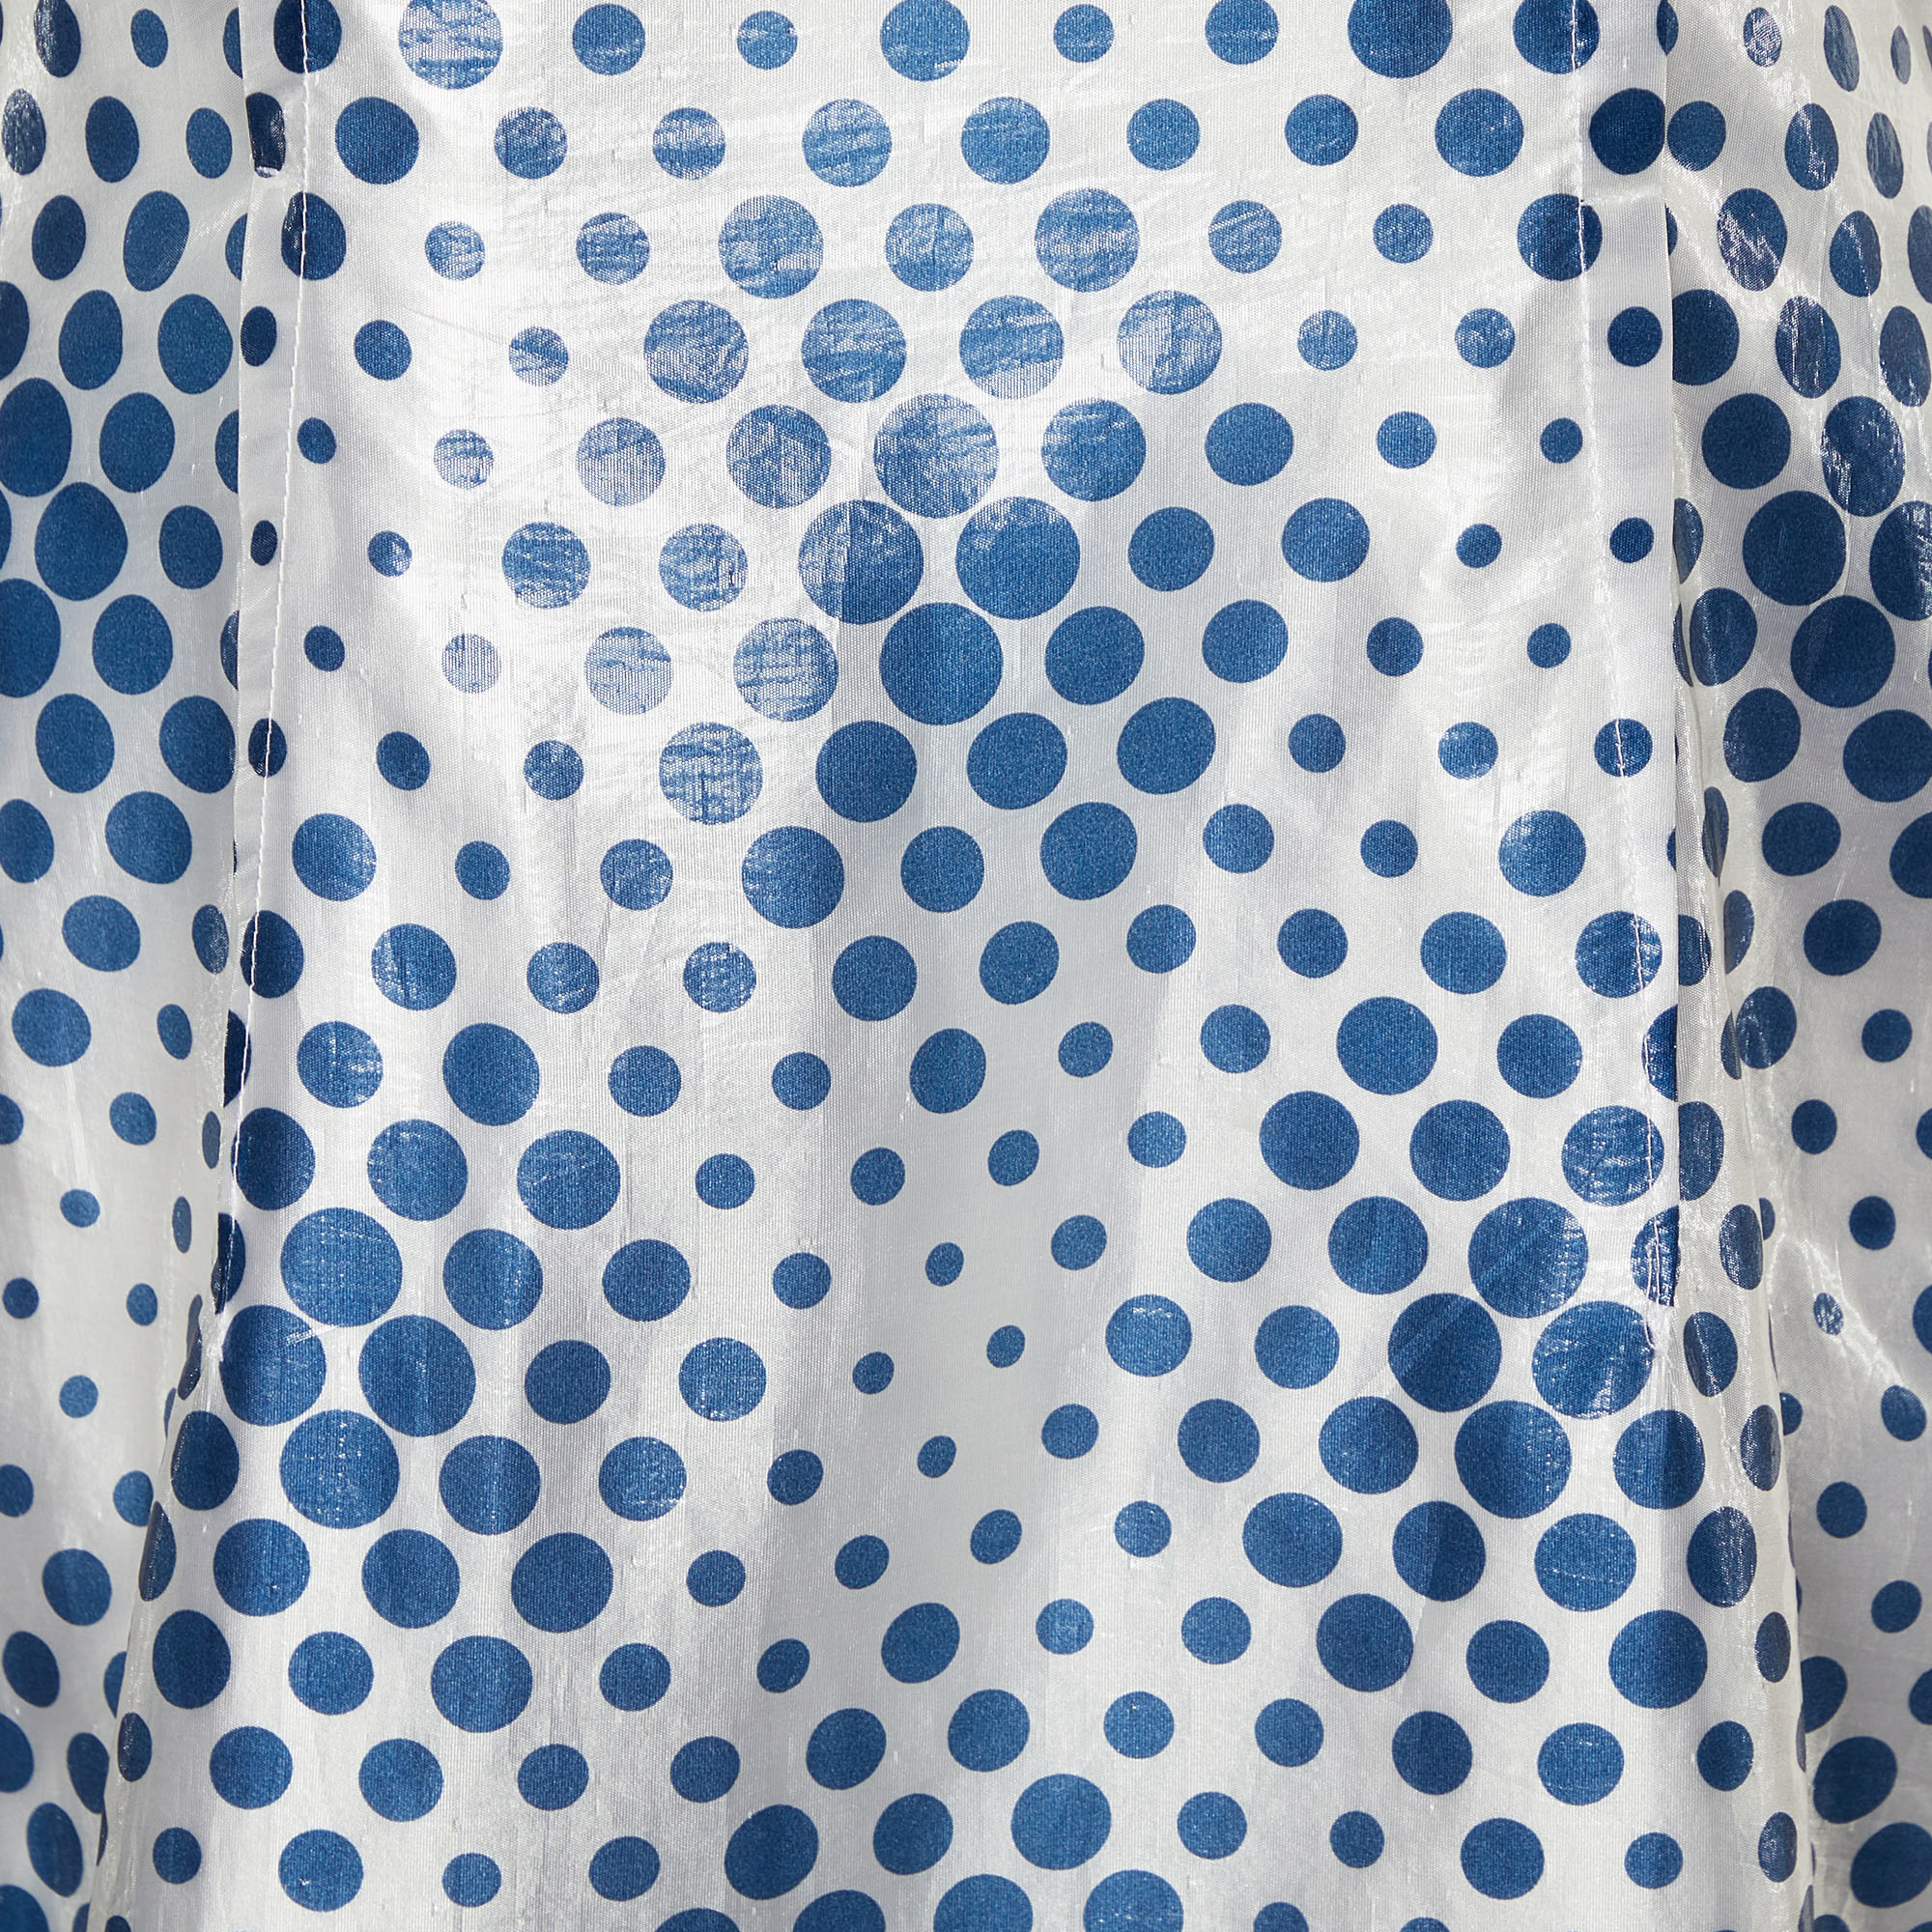 D&G White & Blue Dot Printed Silk Blend Sleeveless Midi Dress L